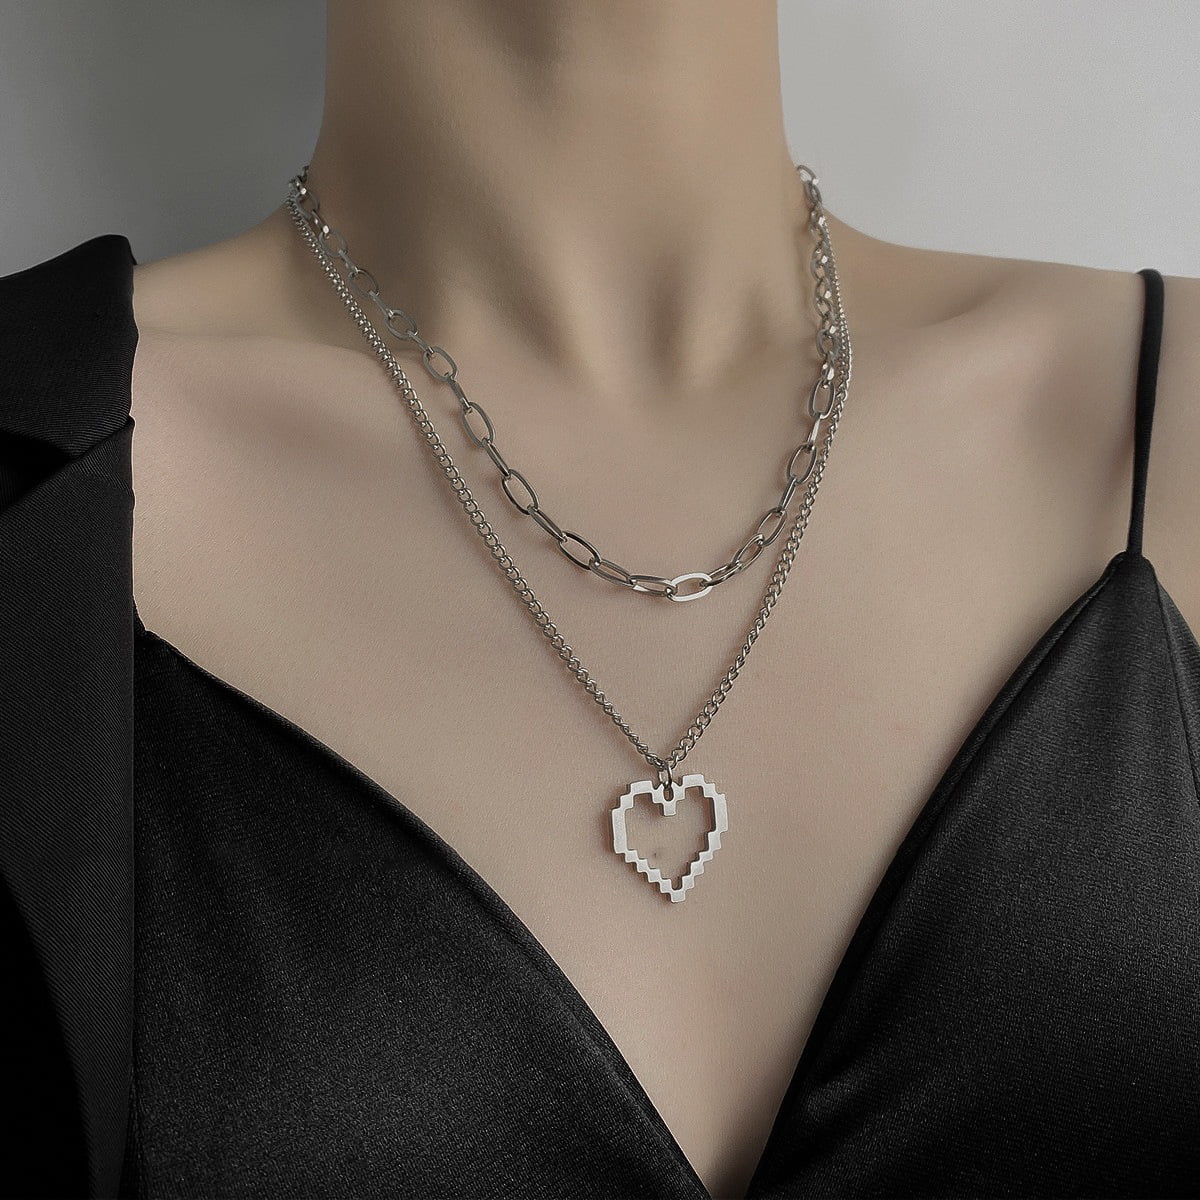 Valenine's Day Gift Mosaic Heart Pendant Mosaic Jewelry Wearable Art Jewelry Mosaic Necklace